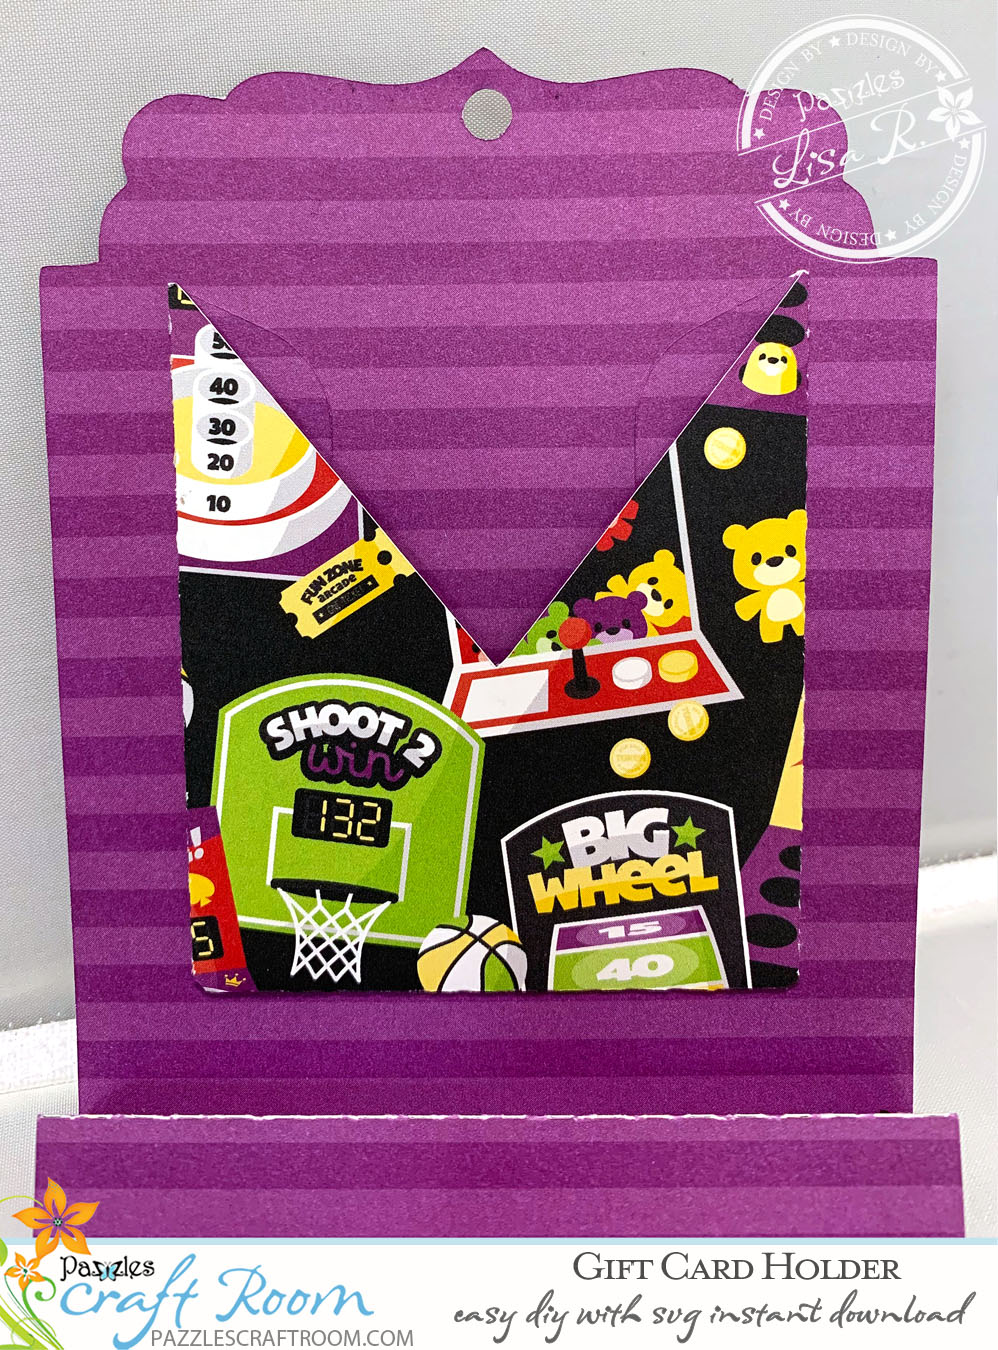 Pazzles DIY Birthday Gift Card Holder by Lisa Reyna